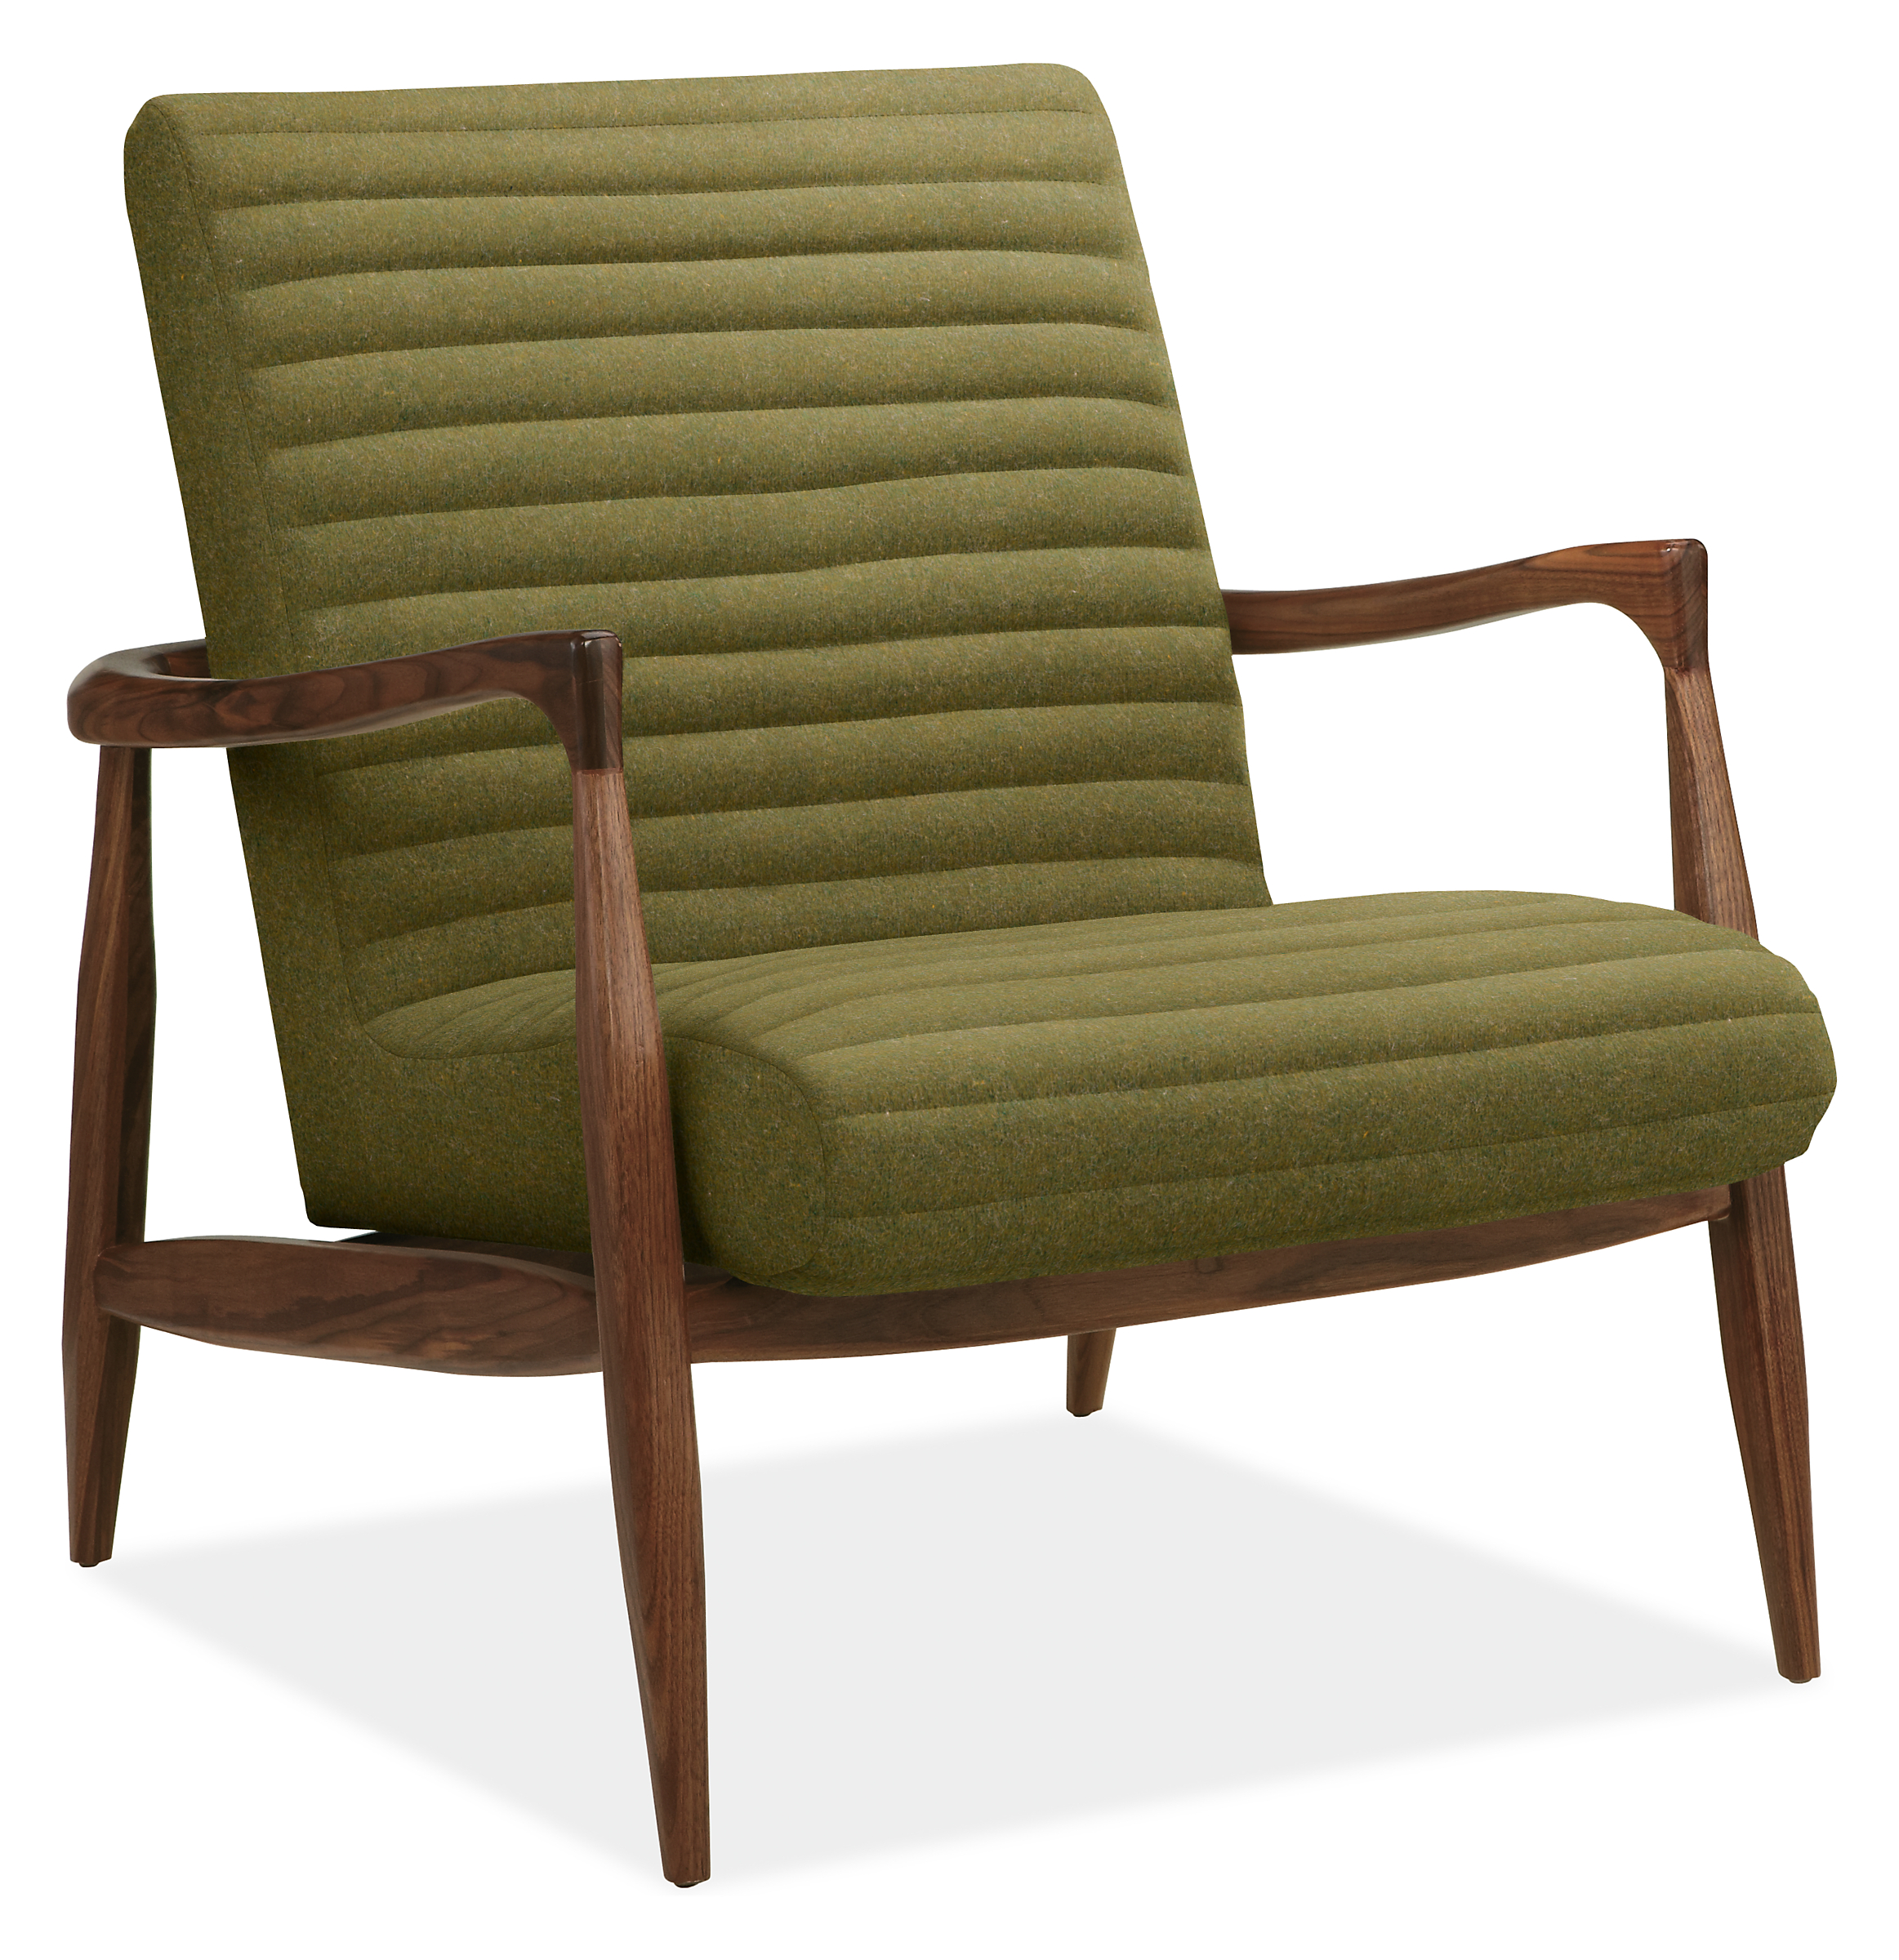 Callan Chair in Vick Fir with Walnut Frame